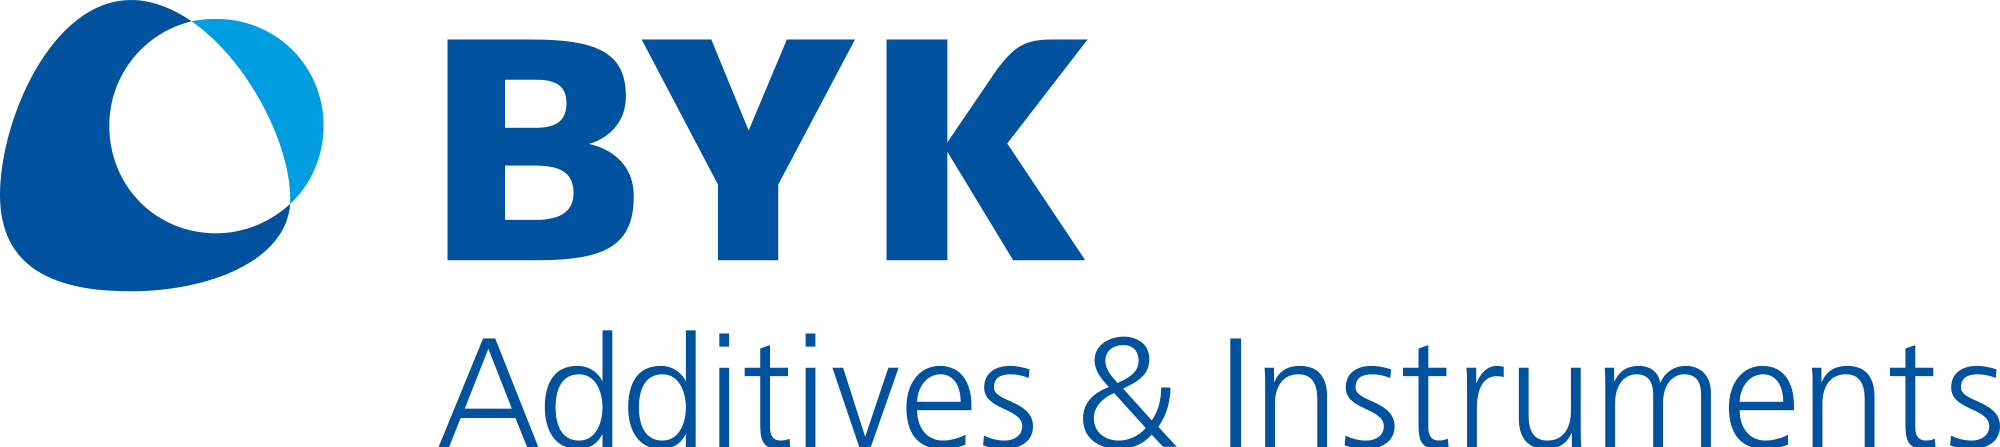 byk-aandi-logo.svg.png